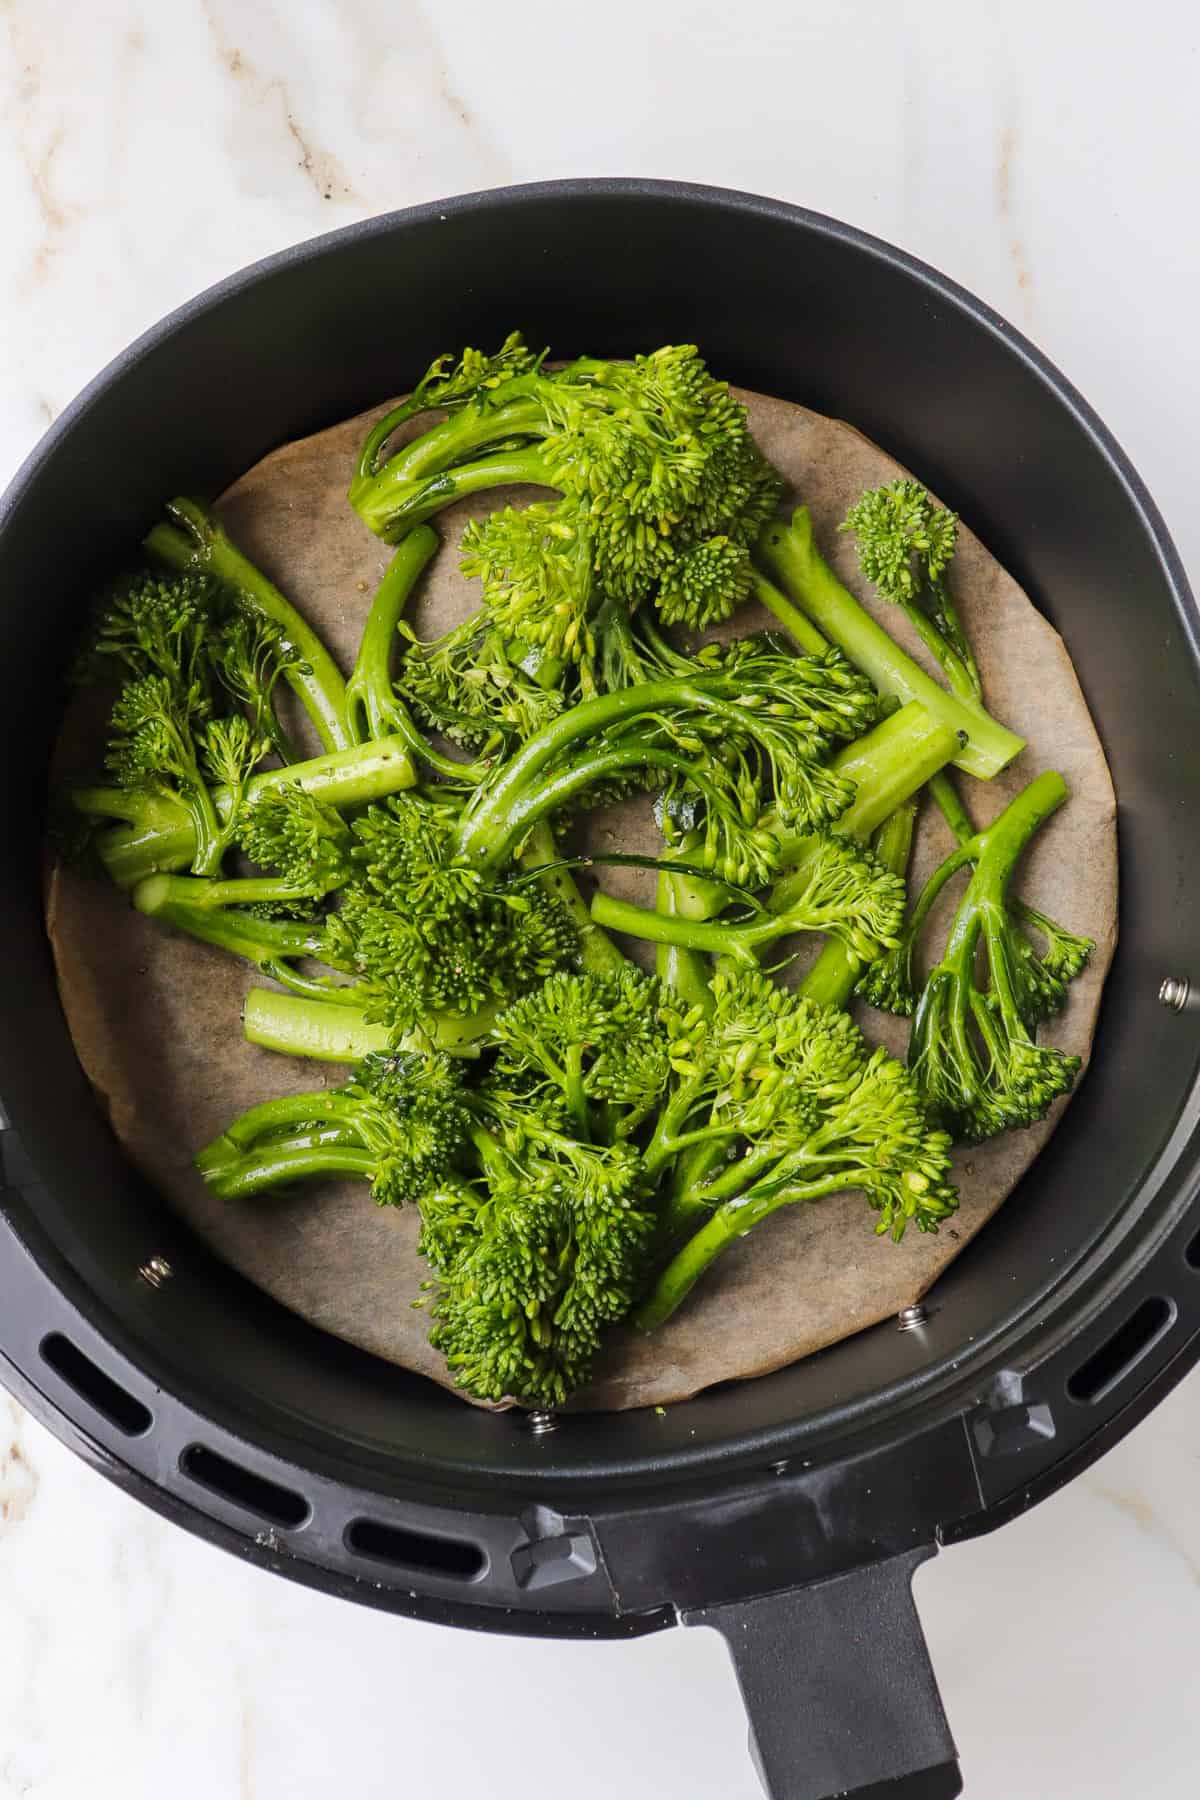 Broccolini in air fryer basket.